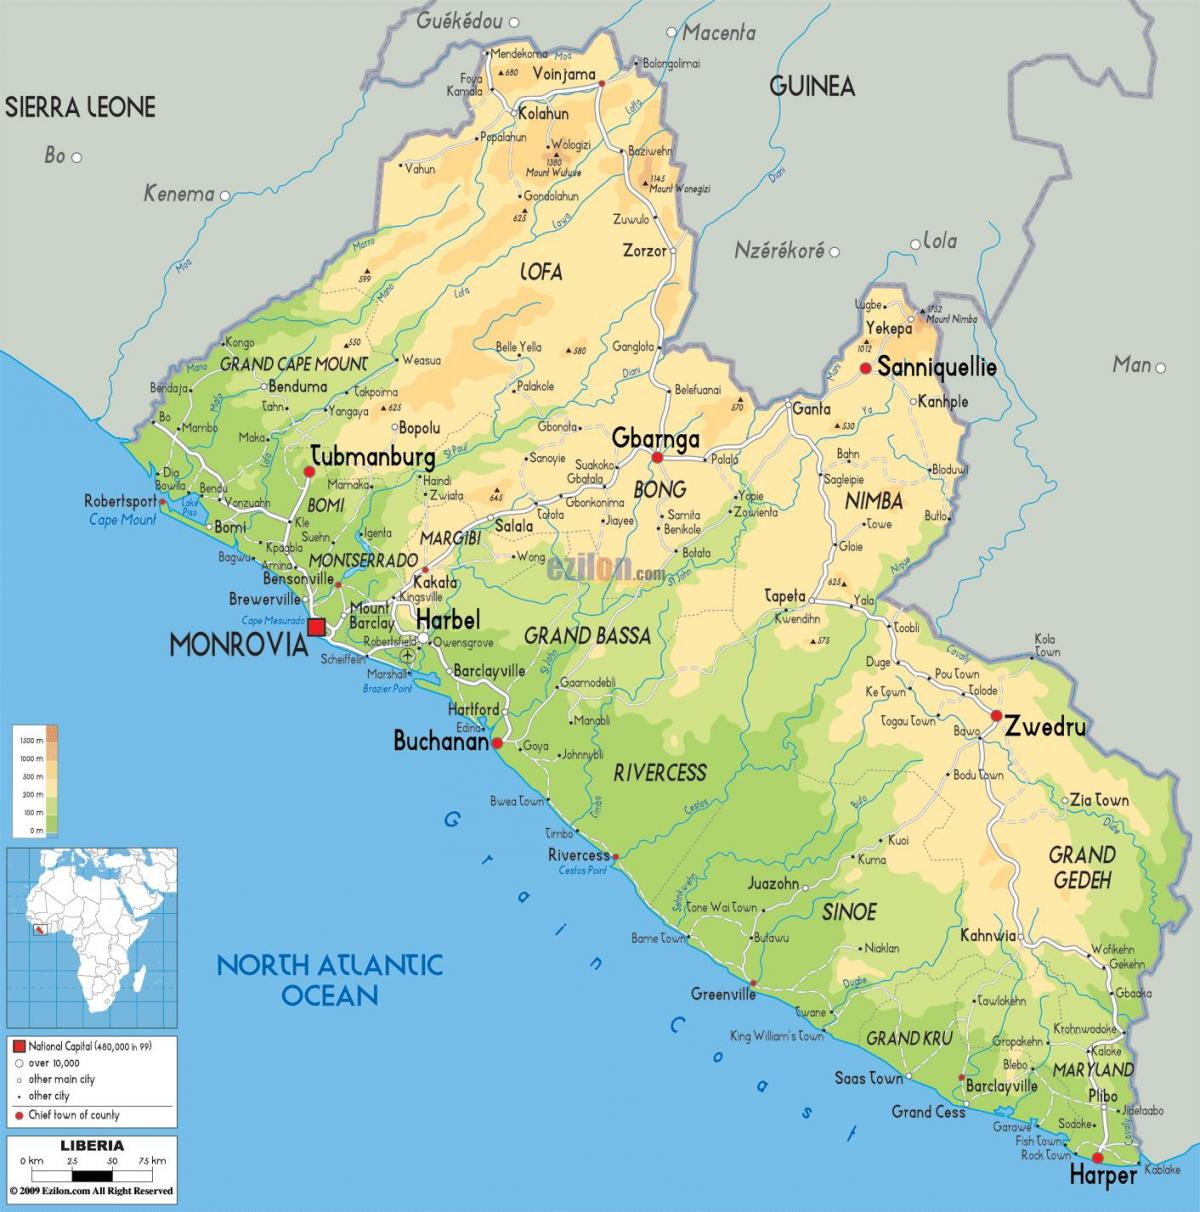 nacrtati na karti Liberiji